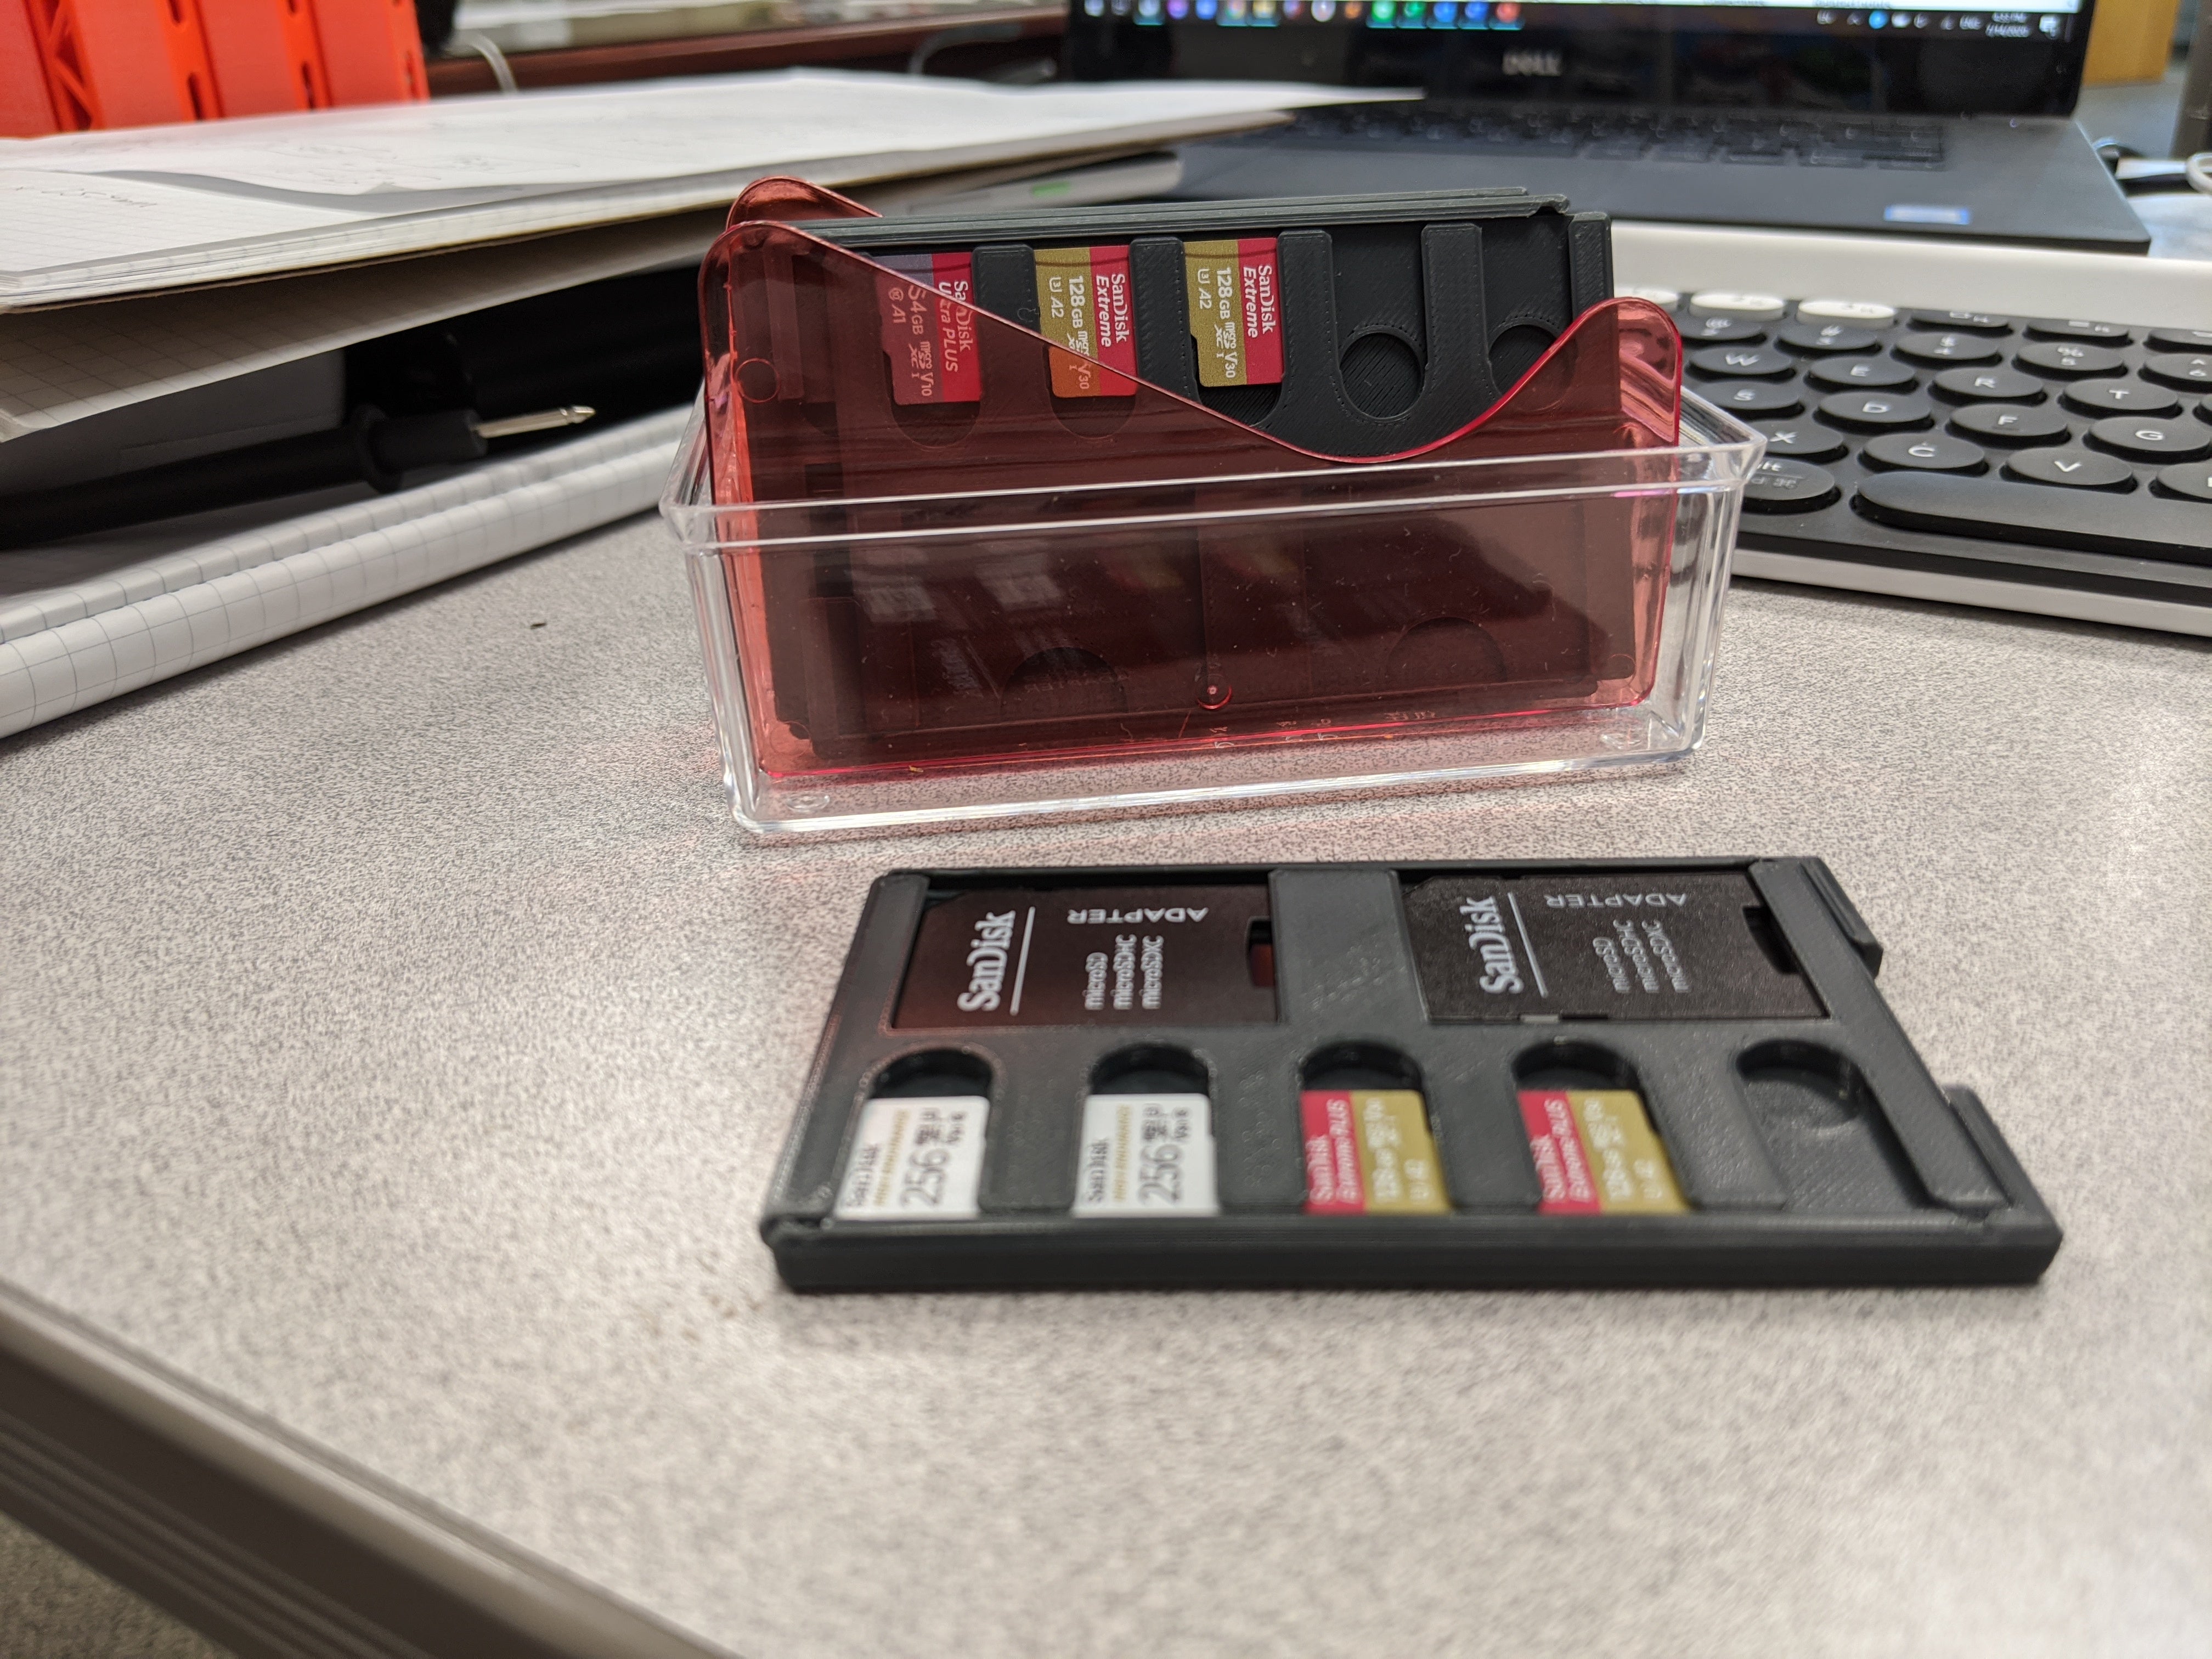 SD/MicroSD-kaart etui in creditcardformaat